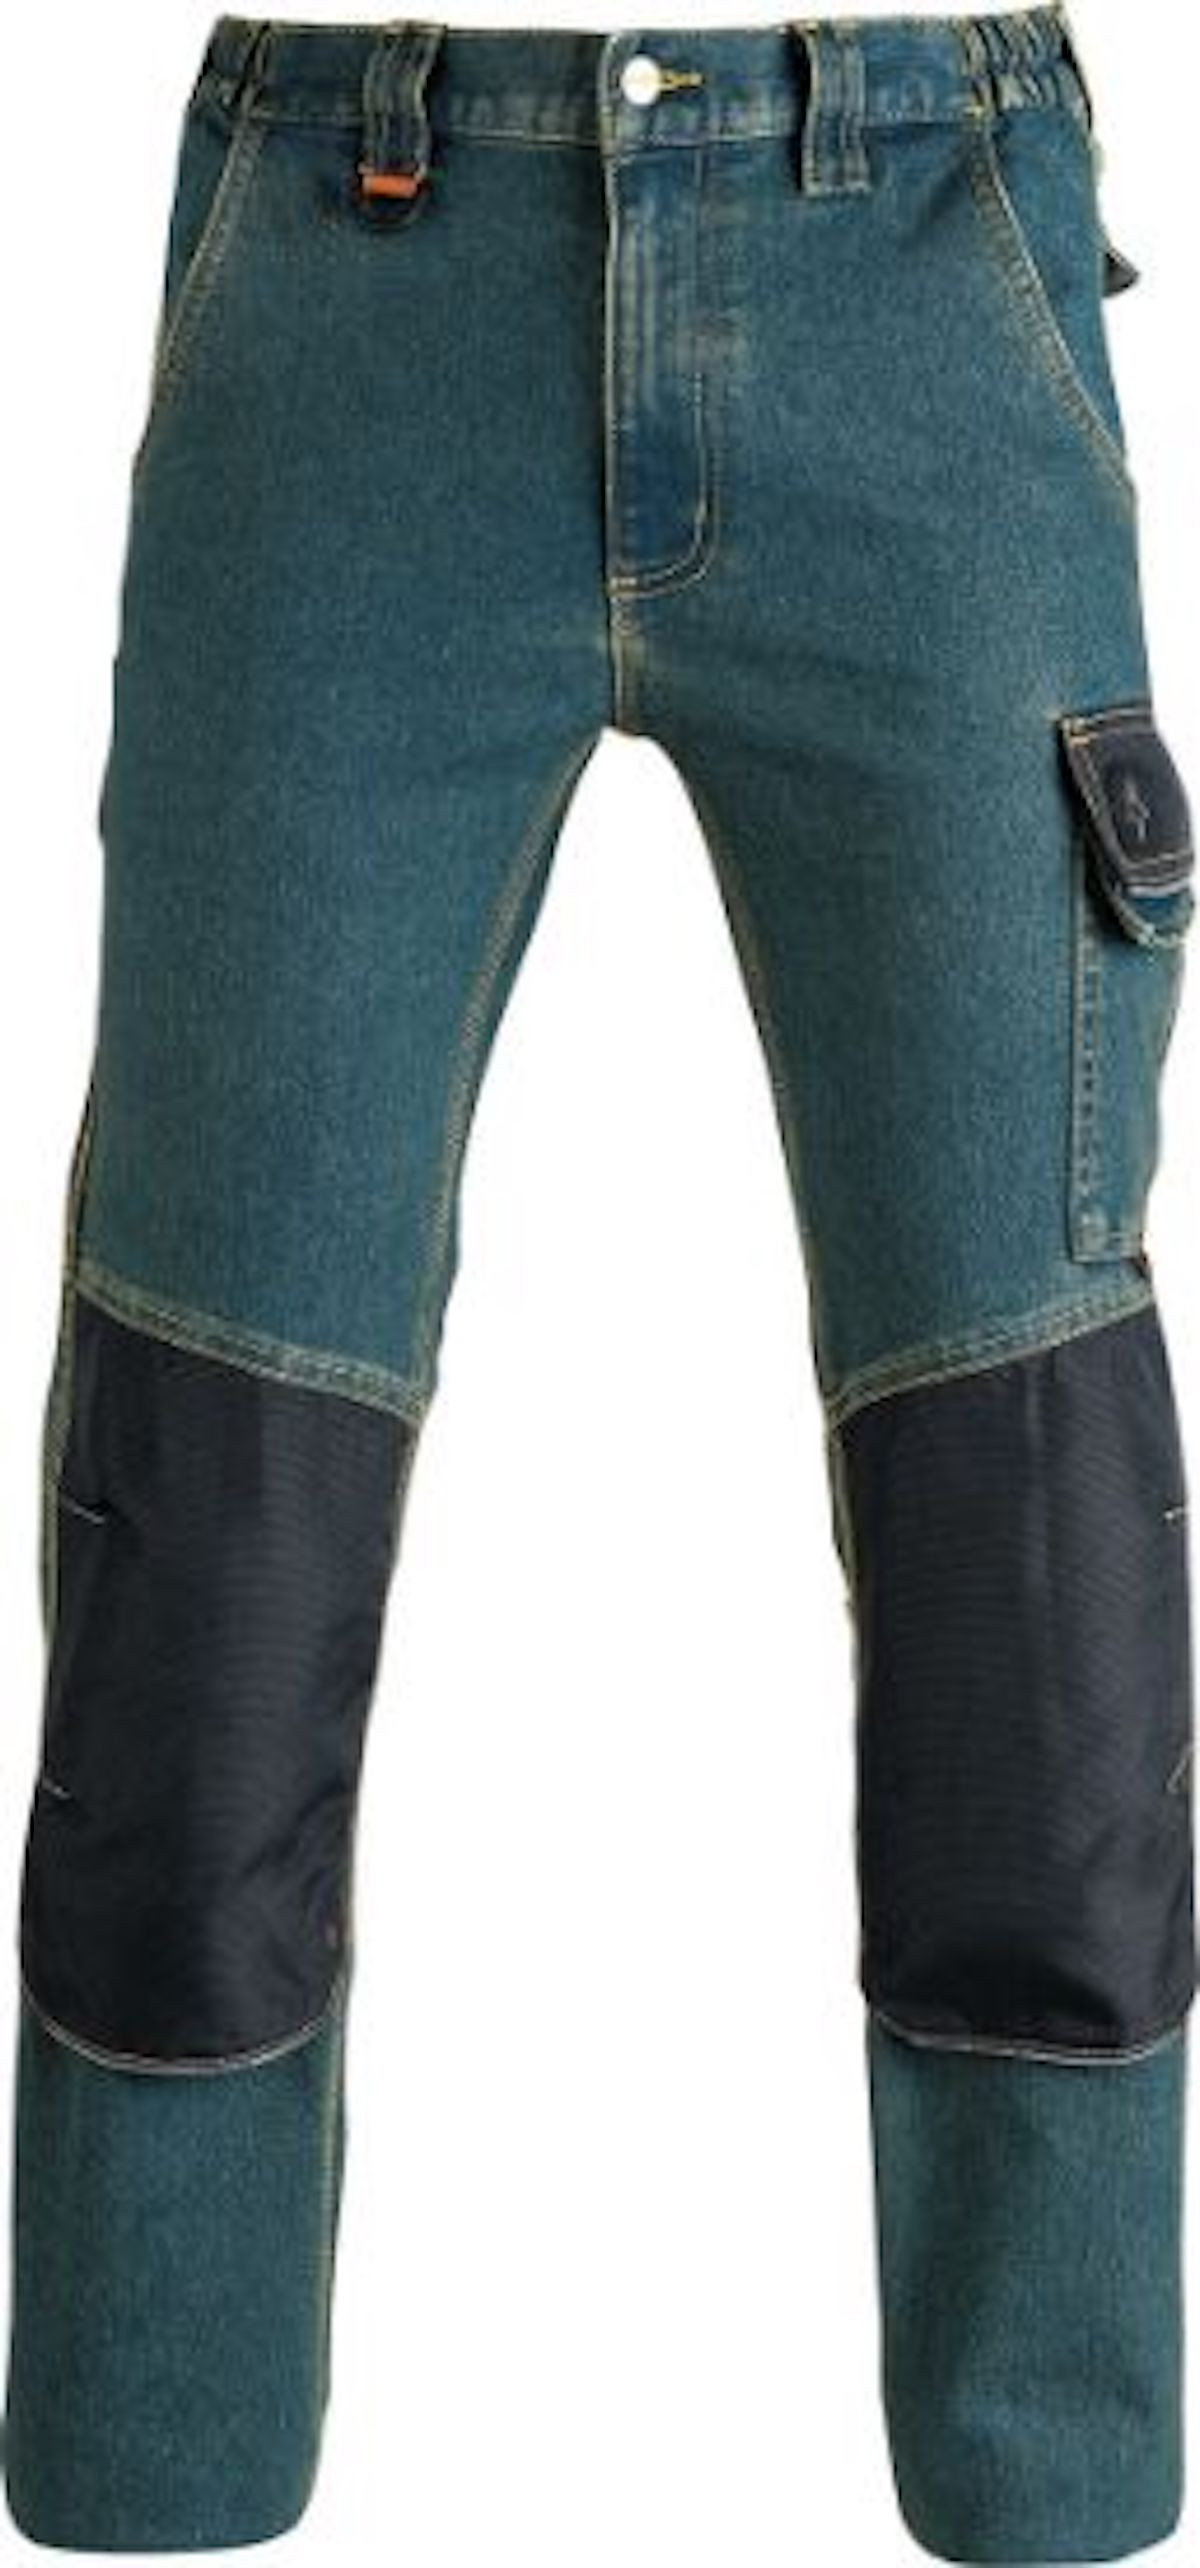 Pantaloni Pro Jeans Teneré Pro Jeans TG. (S - M - L - XXL) - Kapriol